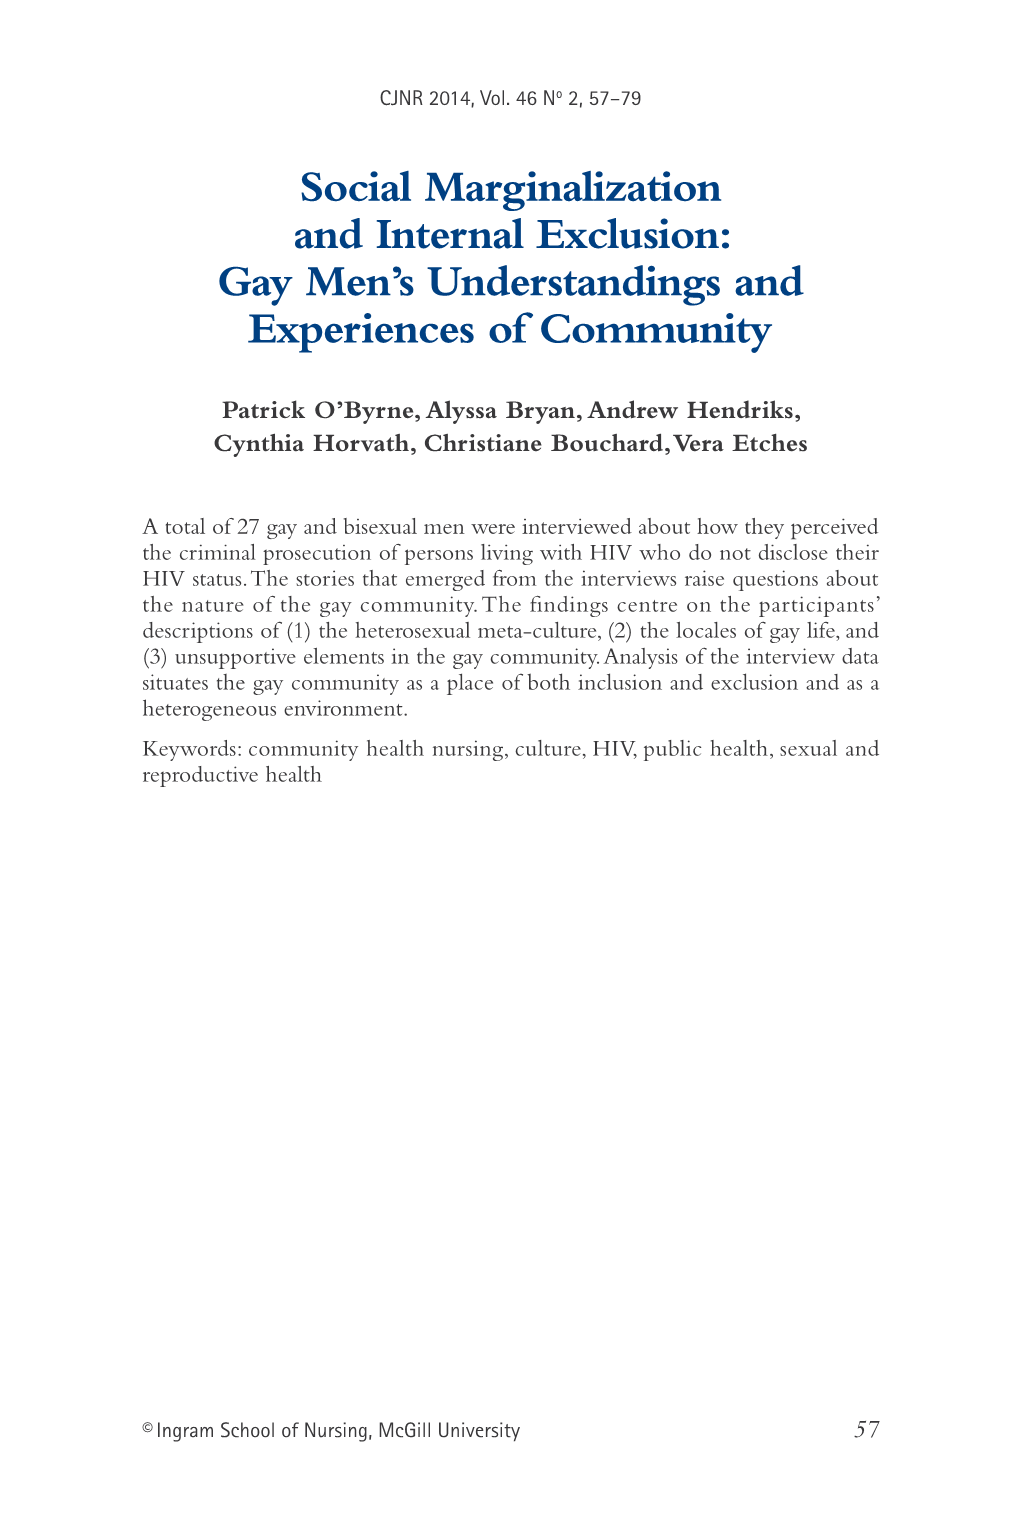 Social Marginalization and Internal Exclusion: Gay Men's